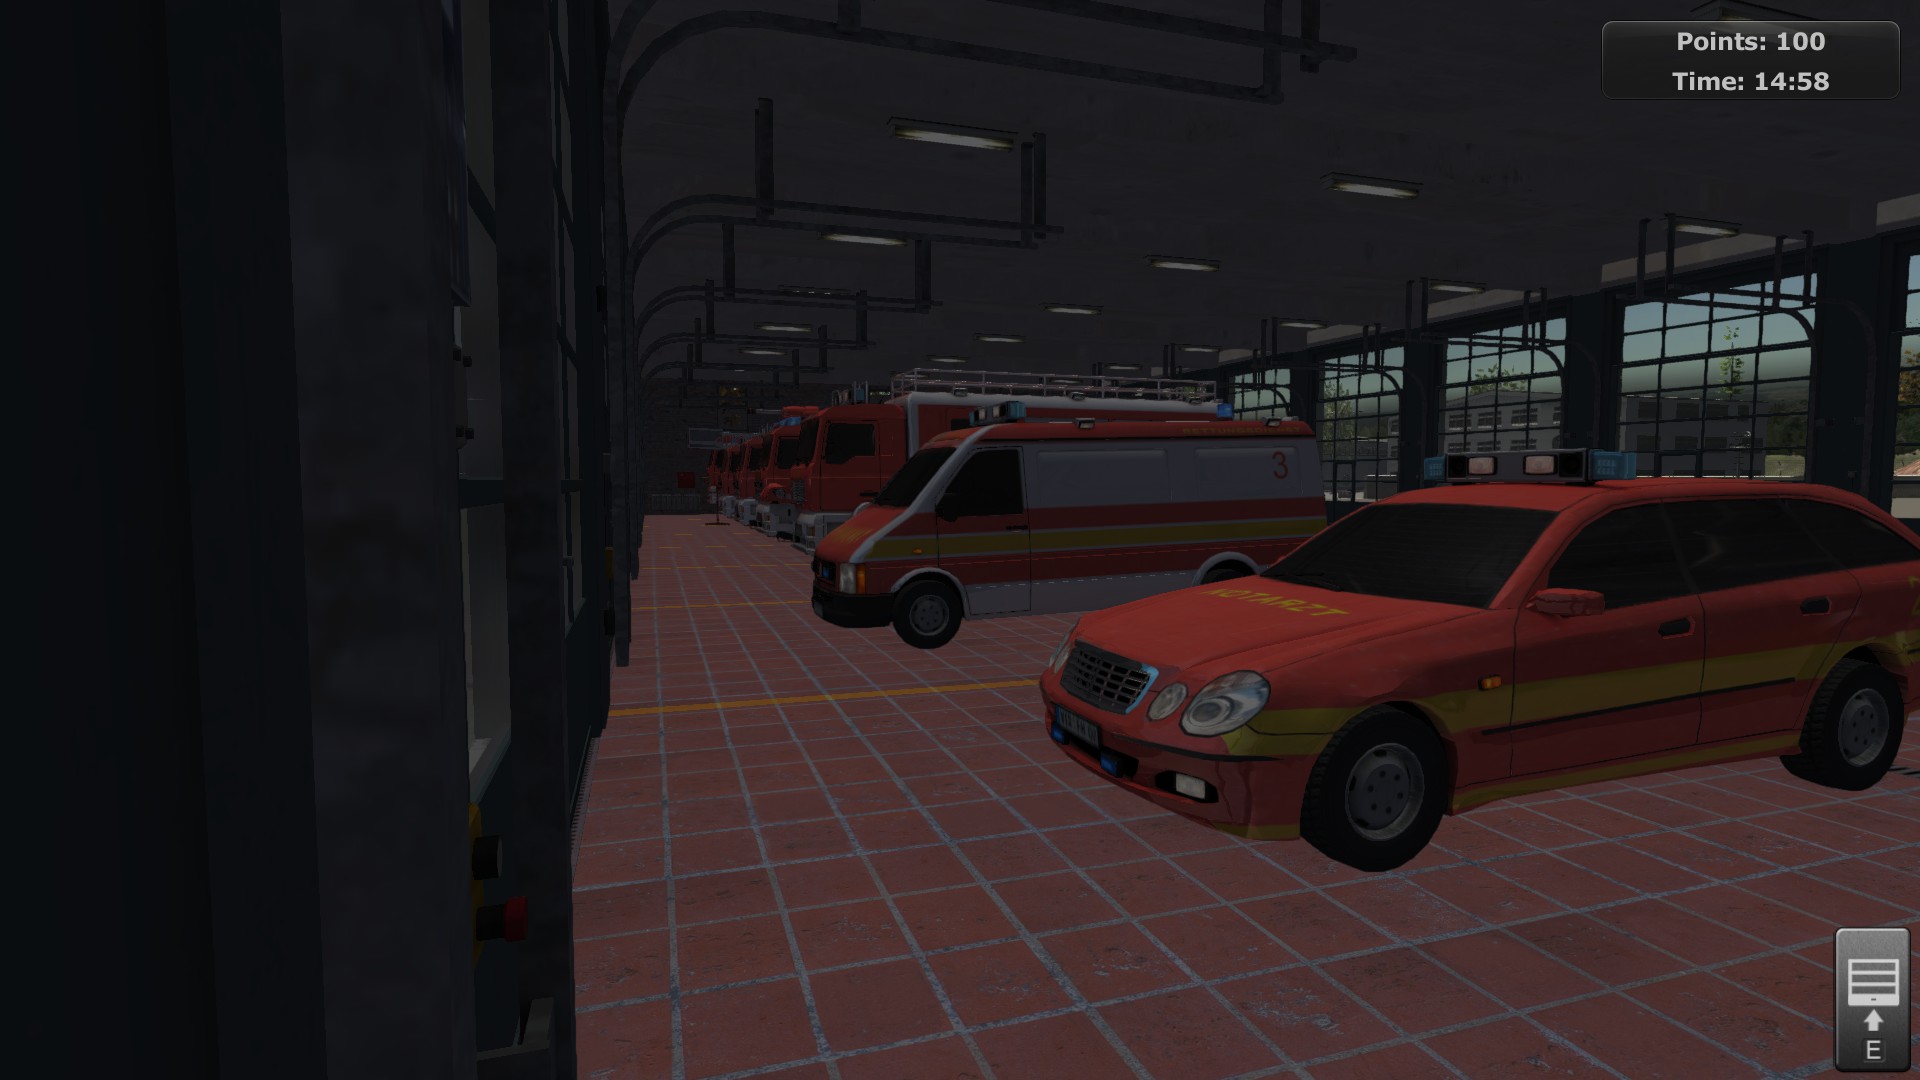 Plant Fire Department - The Simulation screenshot